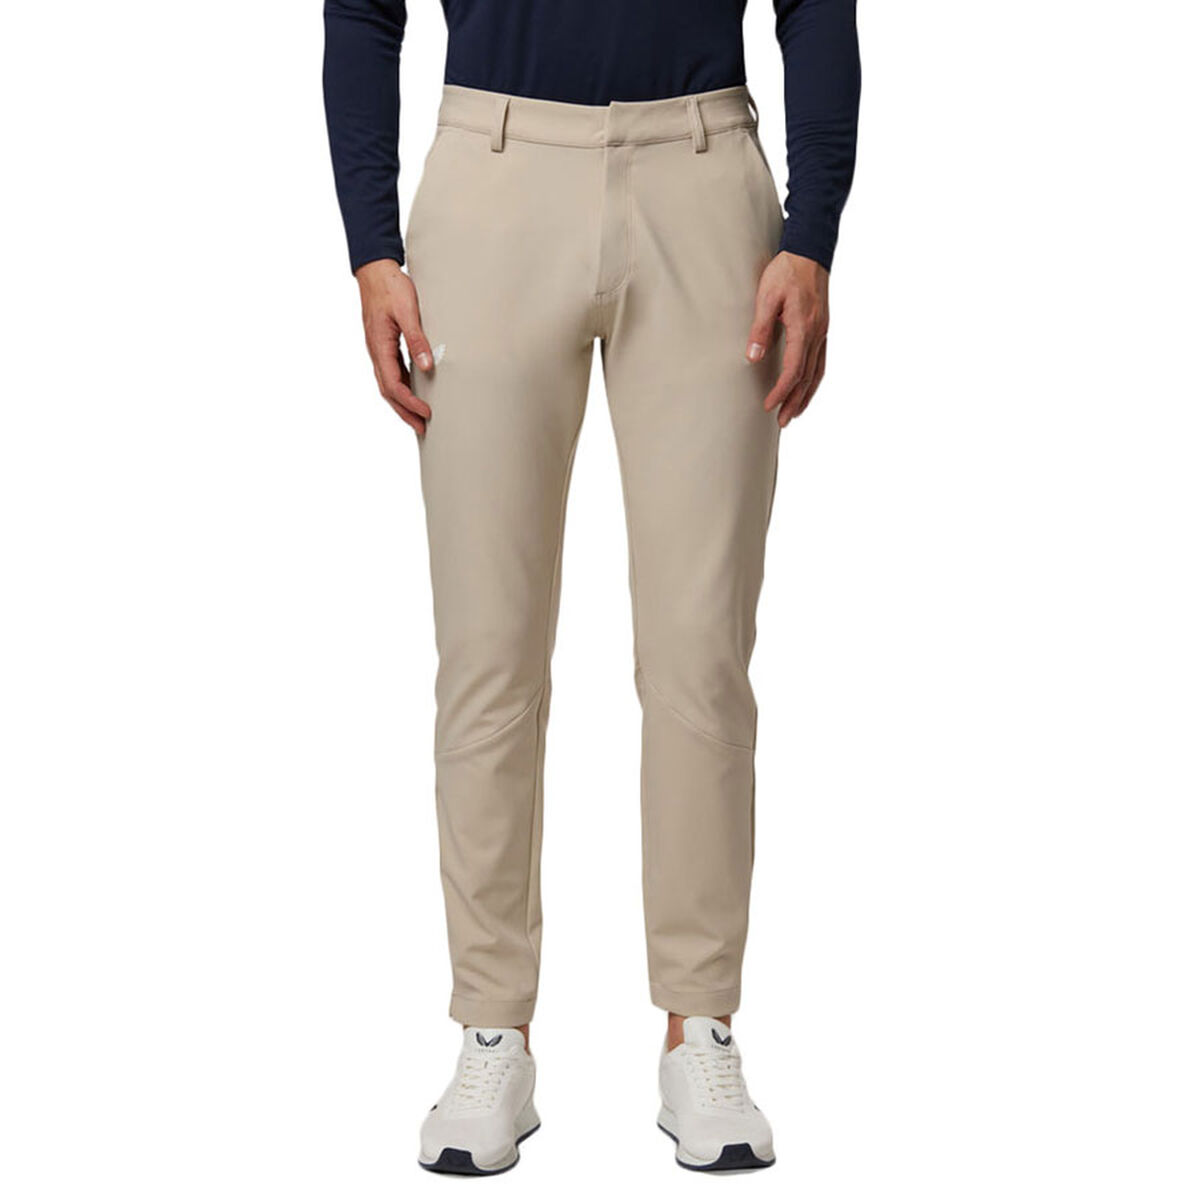 Castore Mens Beige Lightweight Performance Chino Golf Trousers, Size: Medium| American Golf